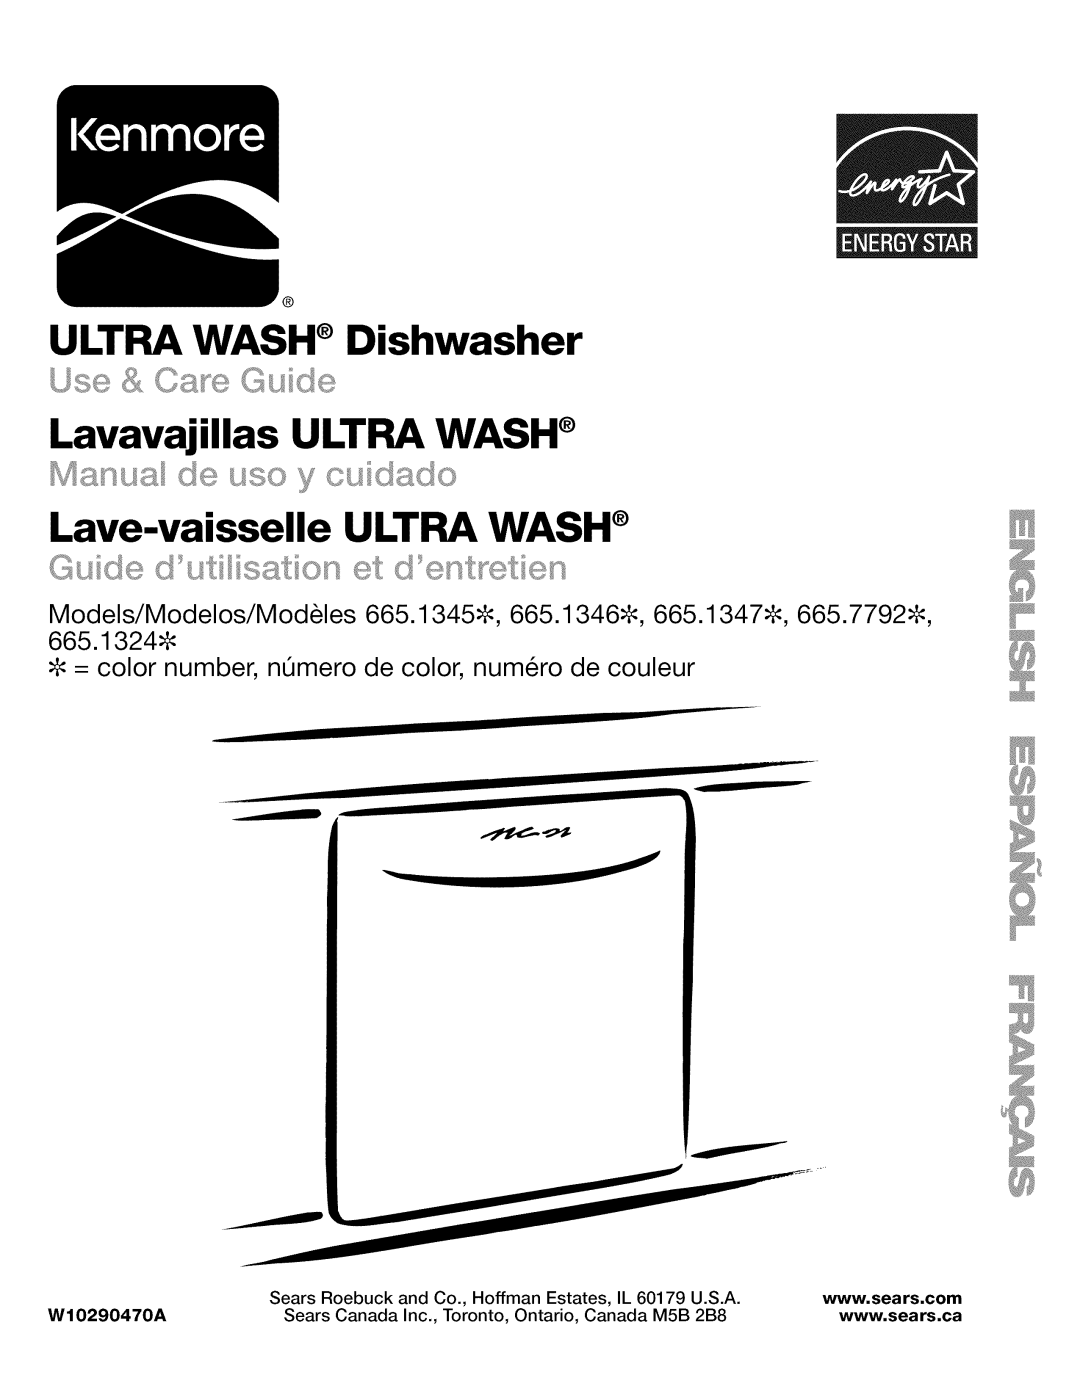 Kenmore 665.1347 manual ULTRA WASH Dishwasher, Lavavajillas ULTRA WASH, Lave-vaisselleULTRA WASH, _Joe & C_,e Guide 